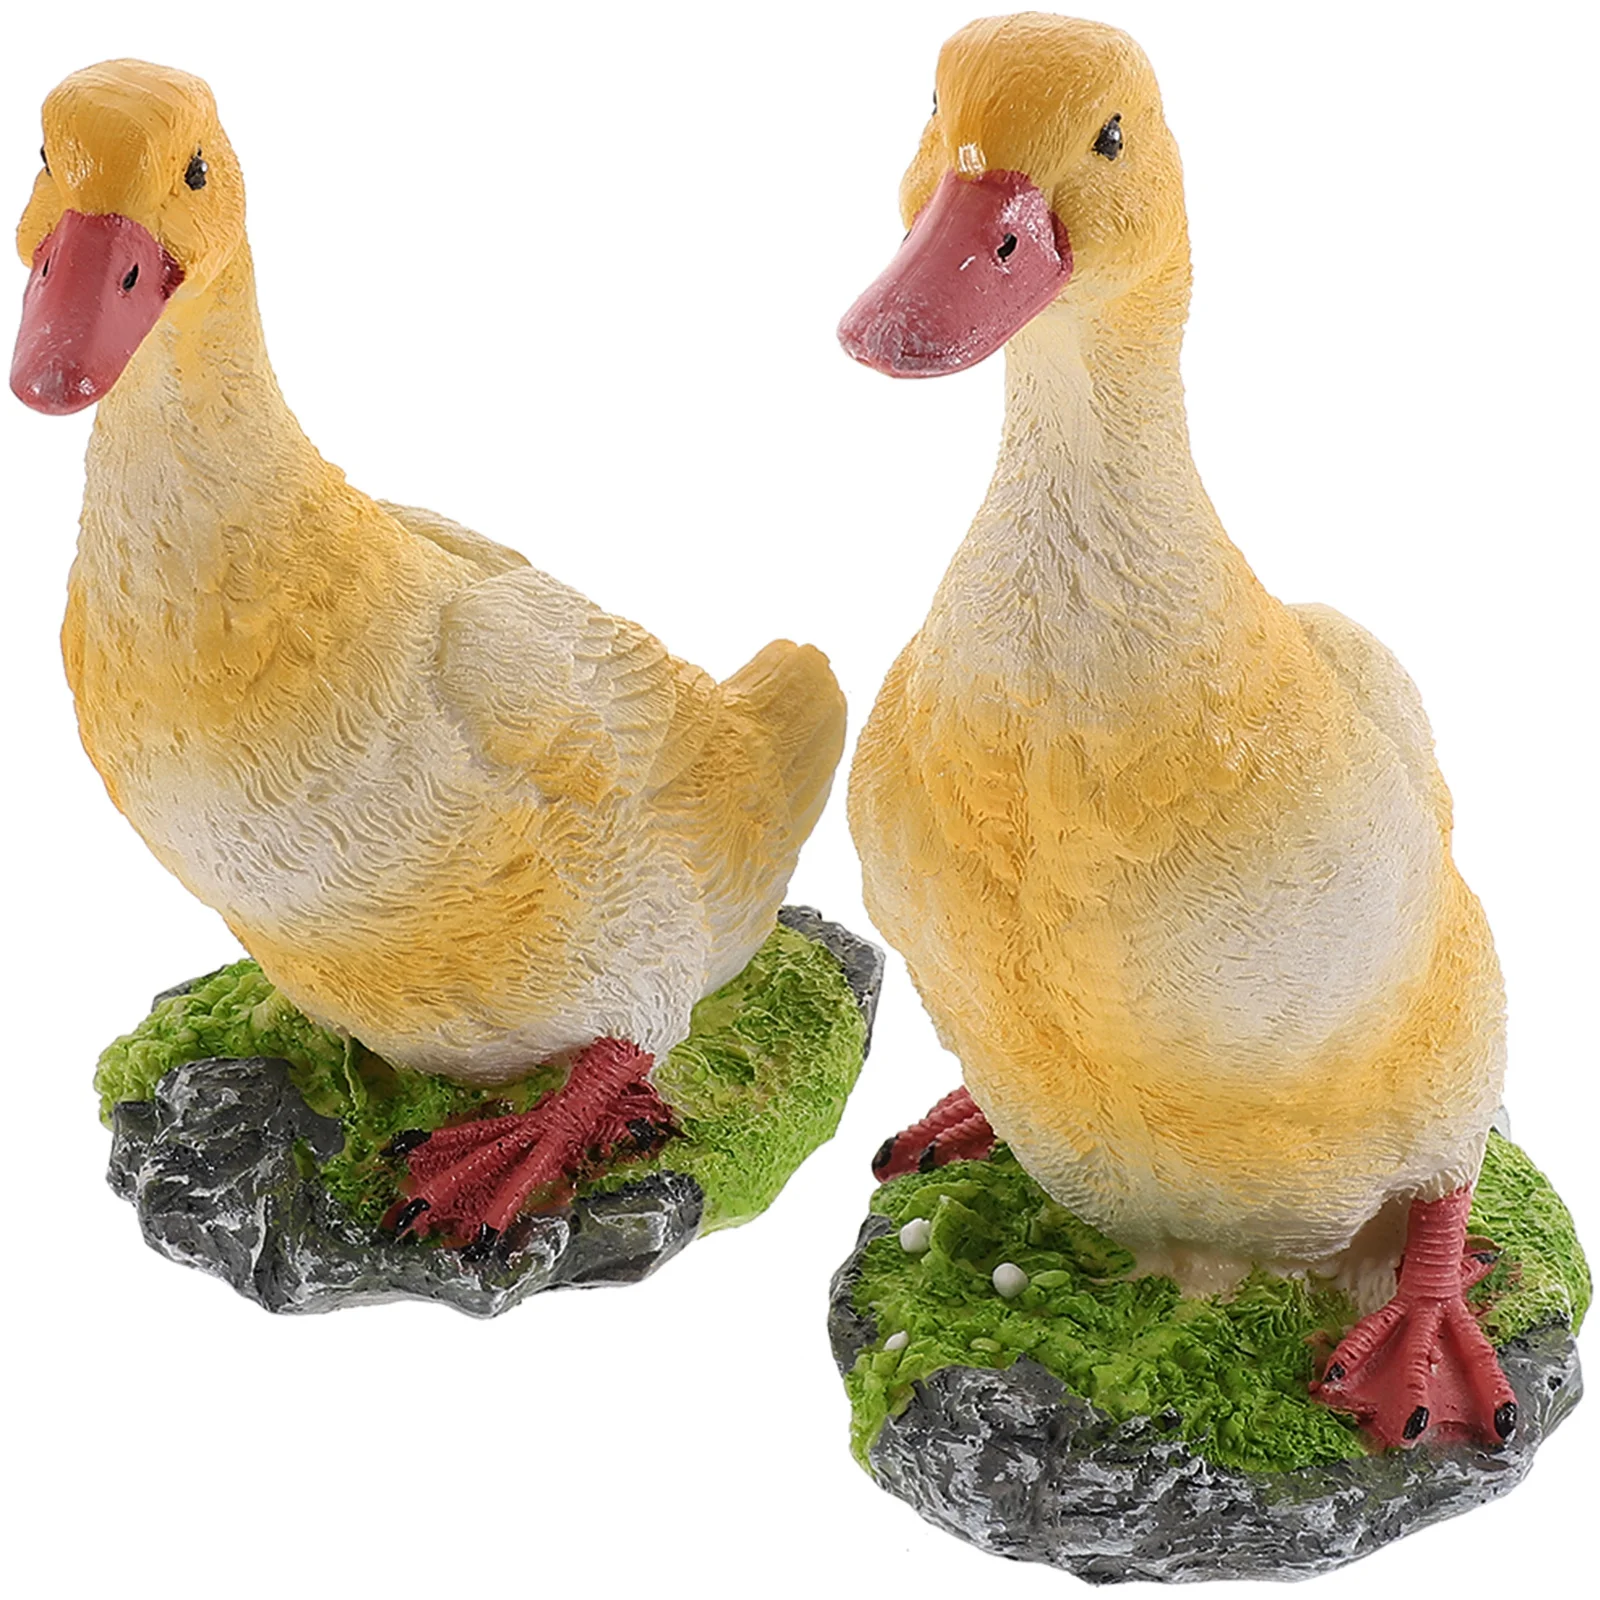 

2 Pcs Resin Duck Prop Simulated Modeling Ornament Crafts Lifelike Decor Resin Vivid Figurines Decorative